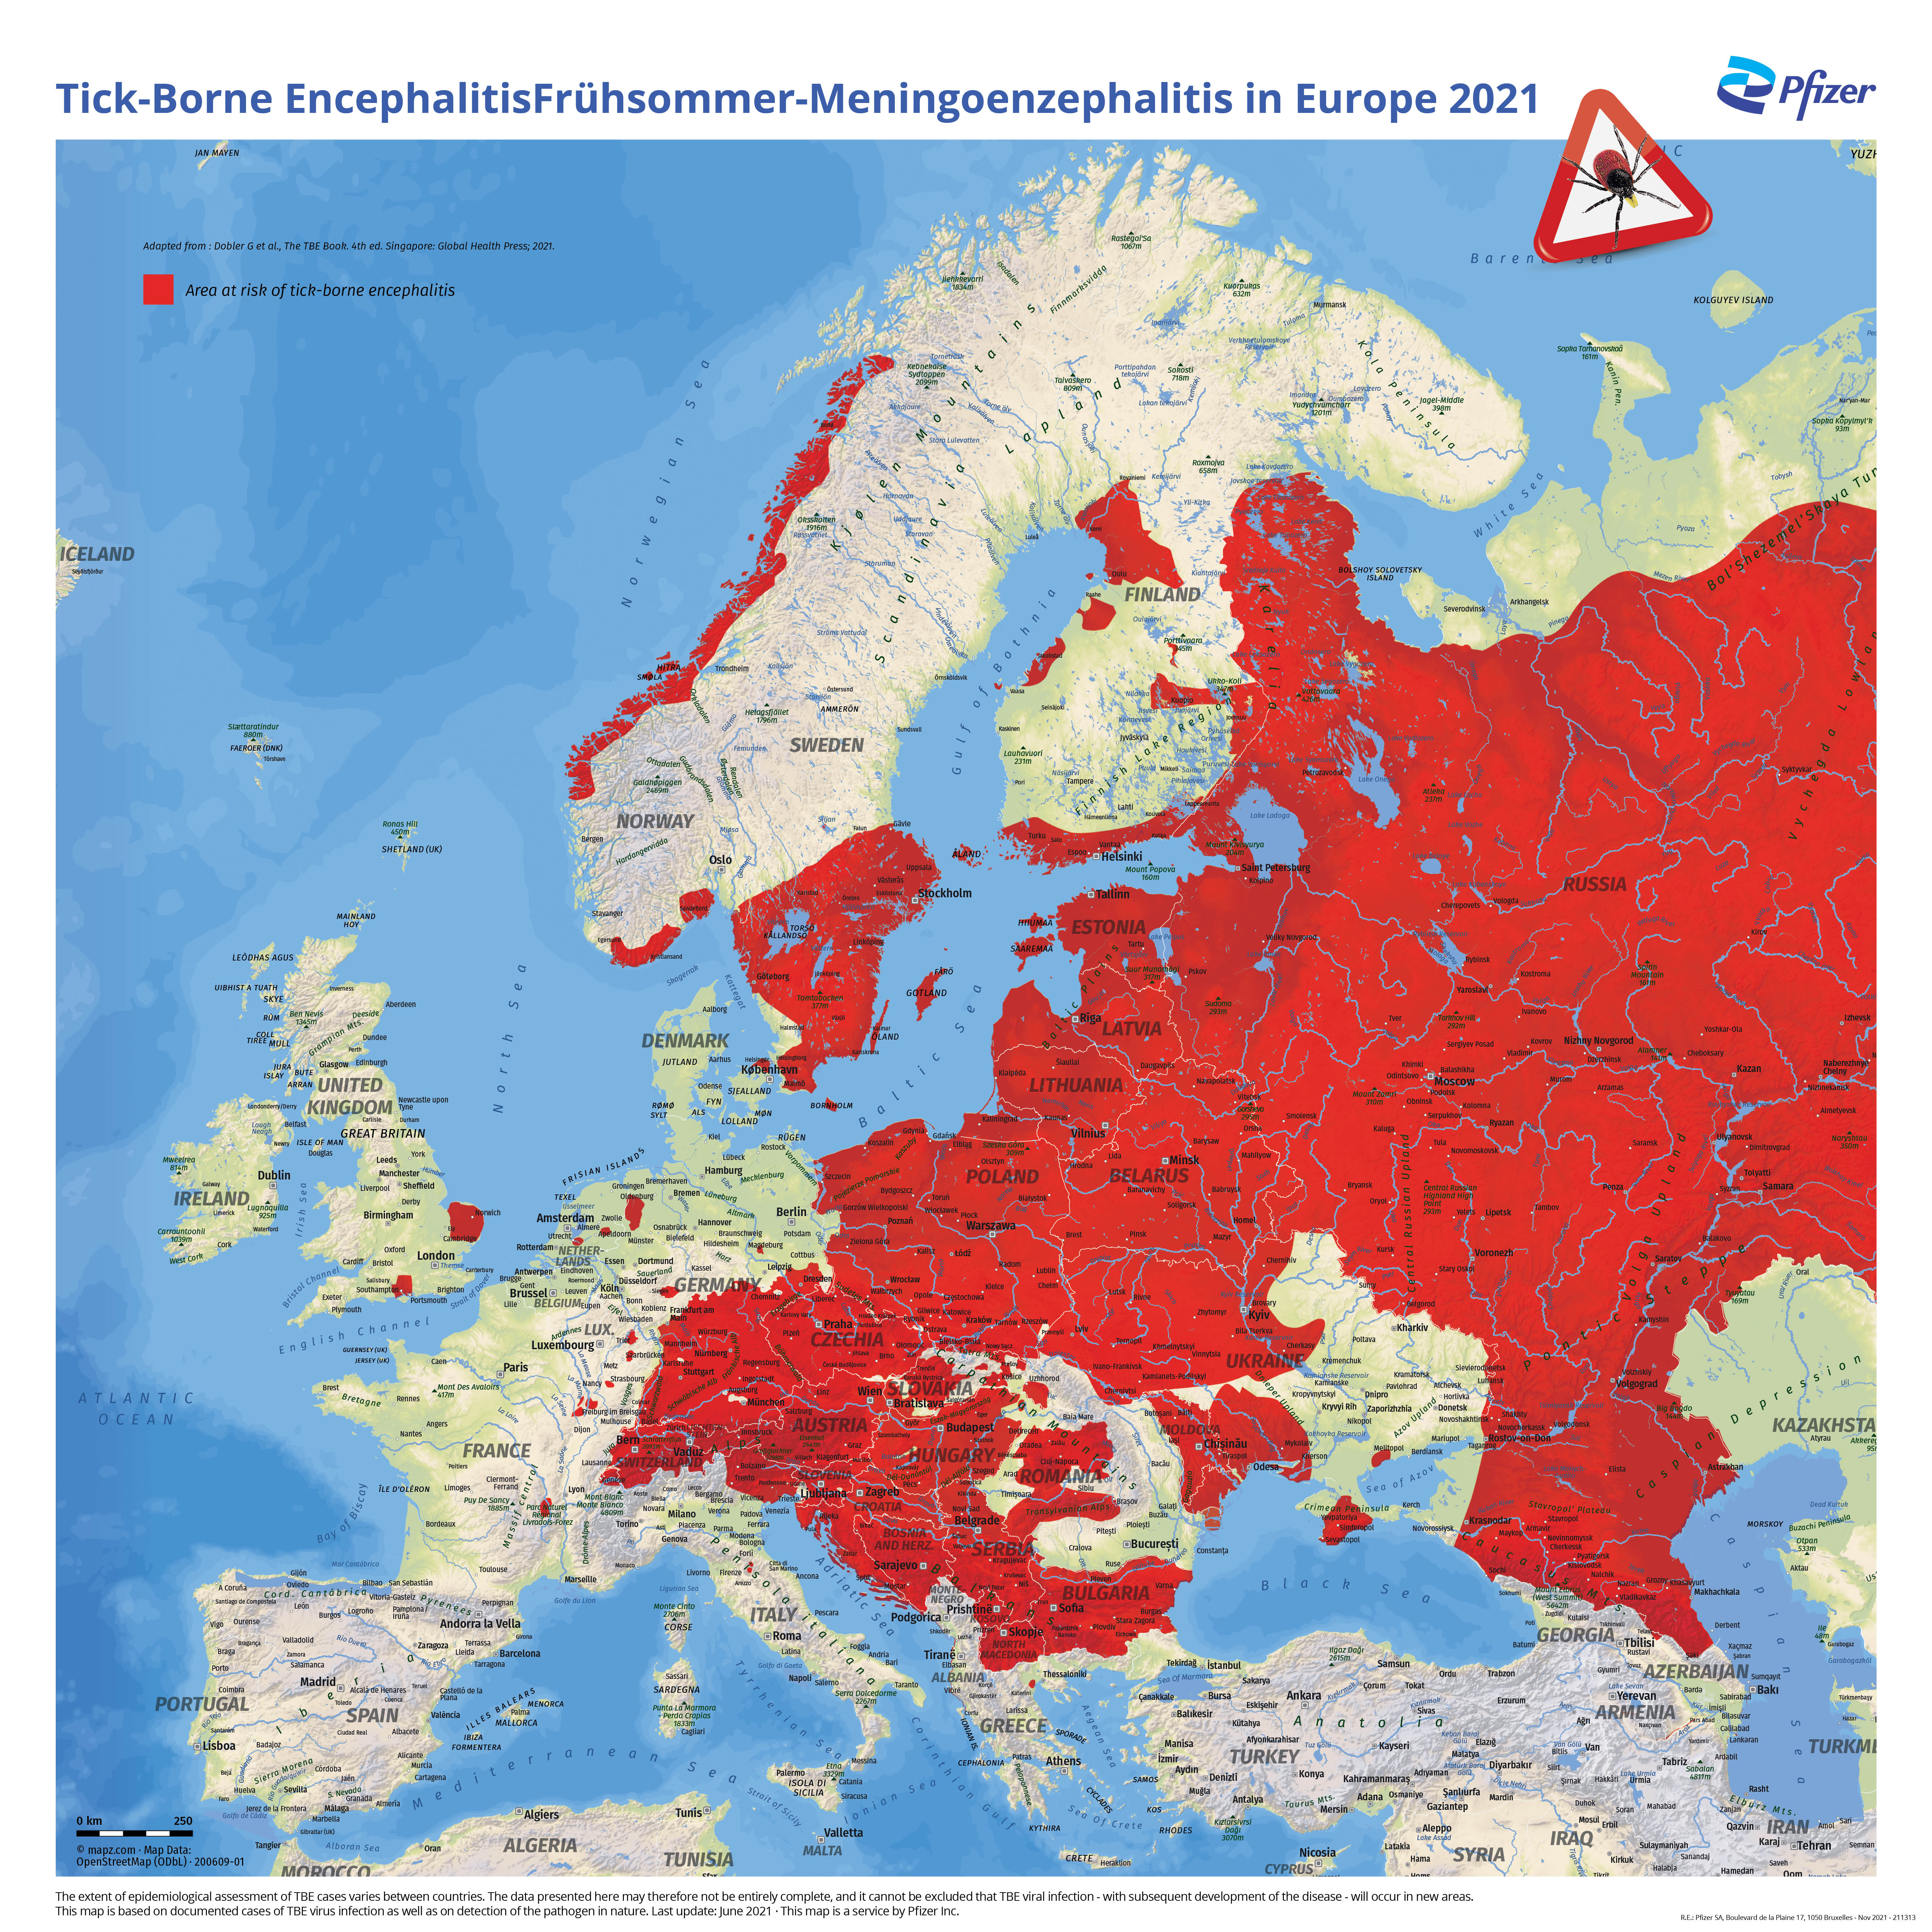 Map of Europe with tick-borne encephalitis risk areas